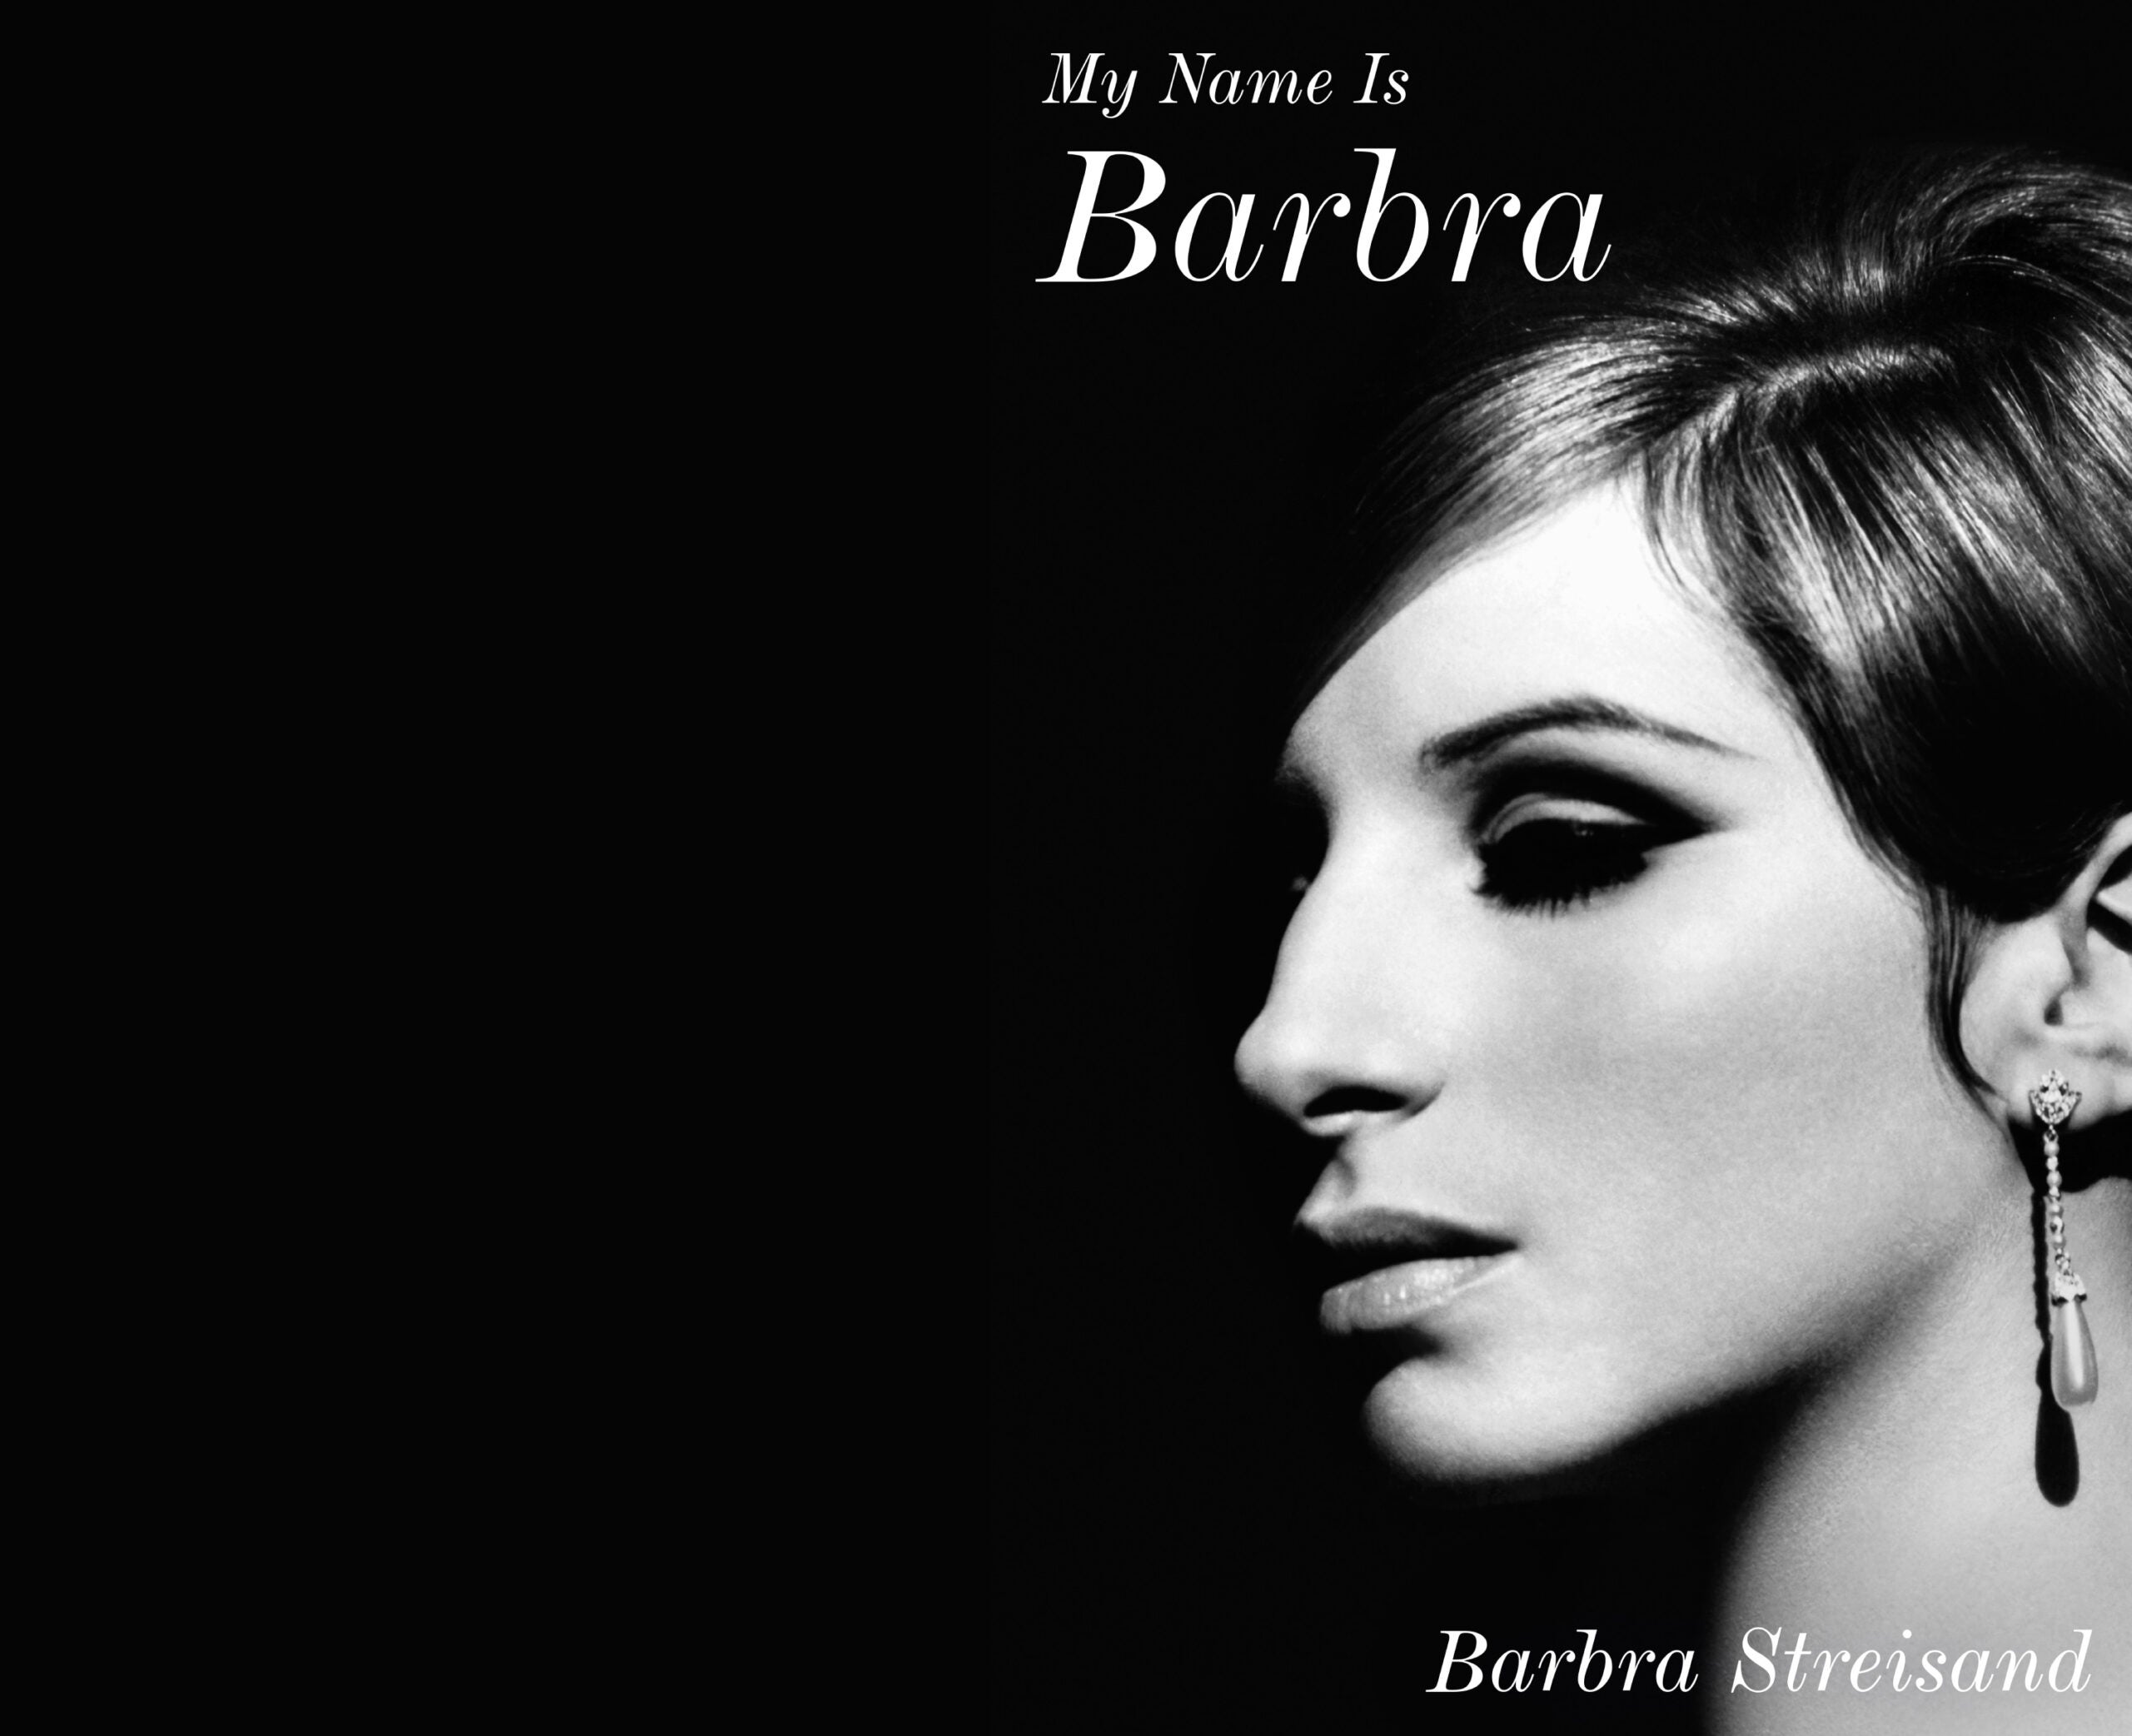 Coming Soon: Books from Barbra Streisand and Matthew McConaughey